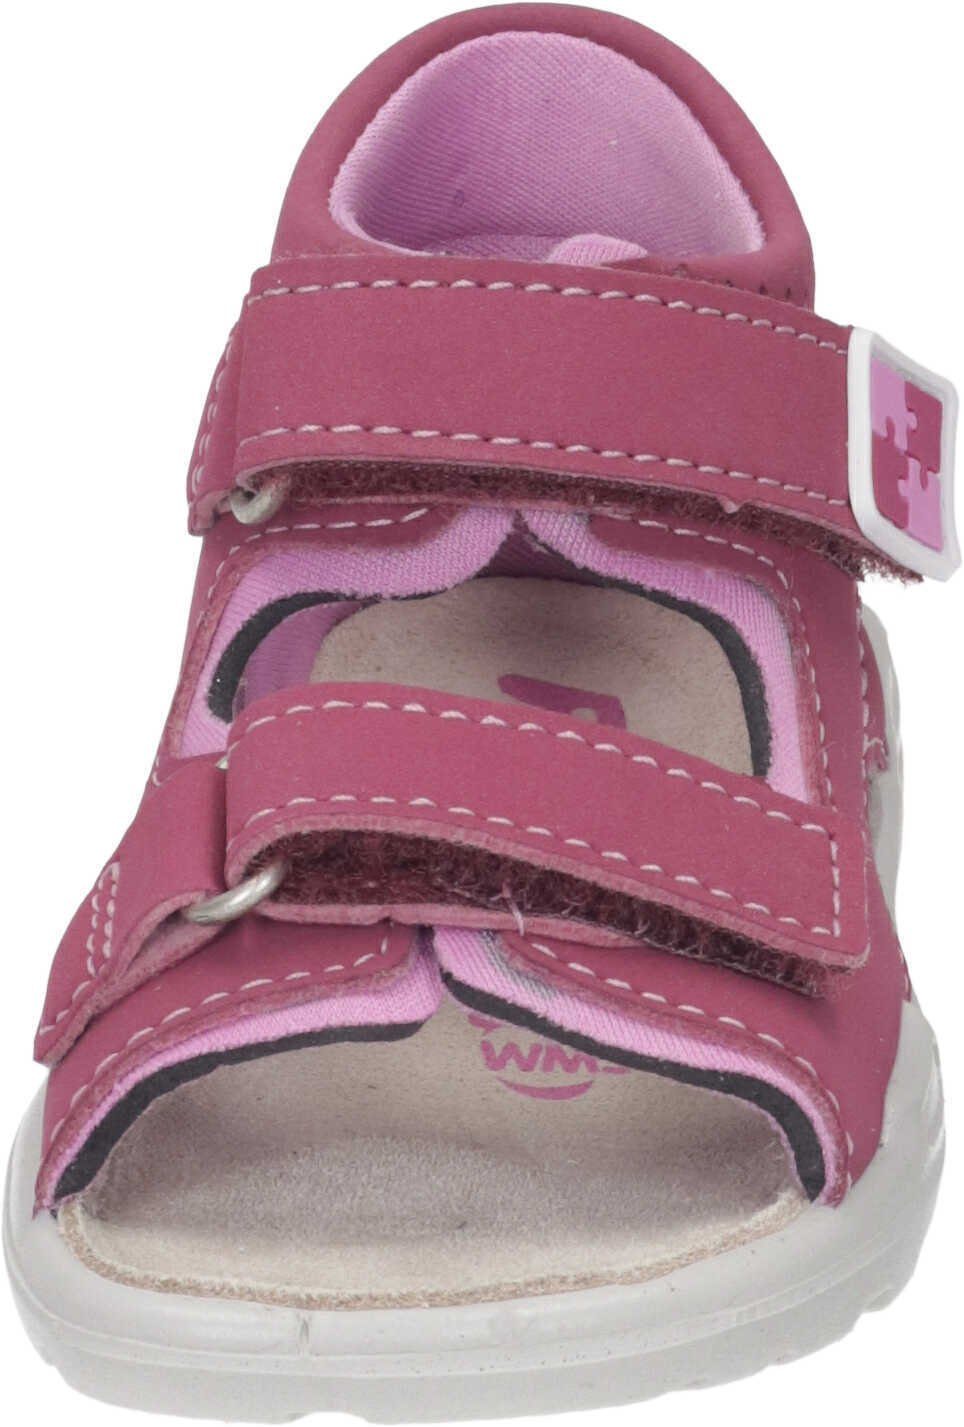 Pepino Sandaletten Outdoorsandale pink Textil aus